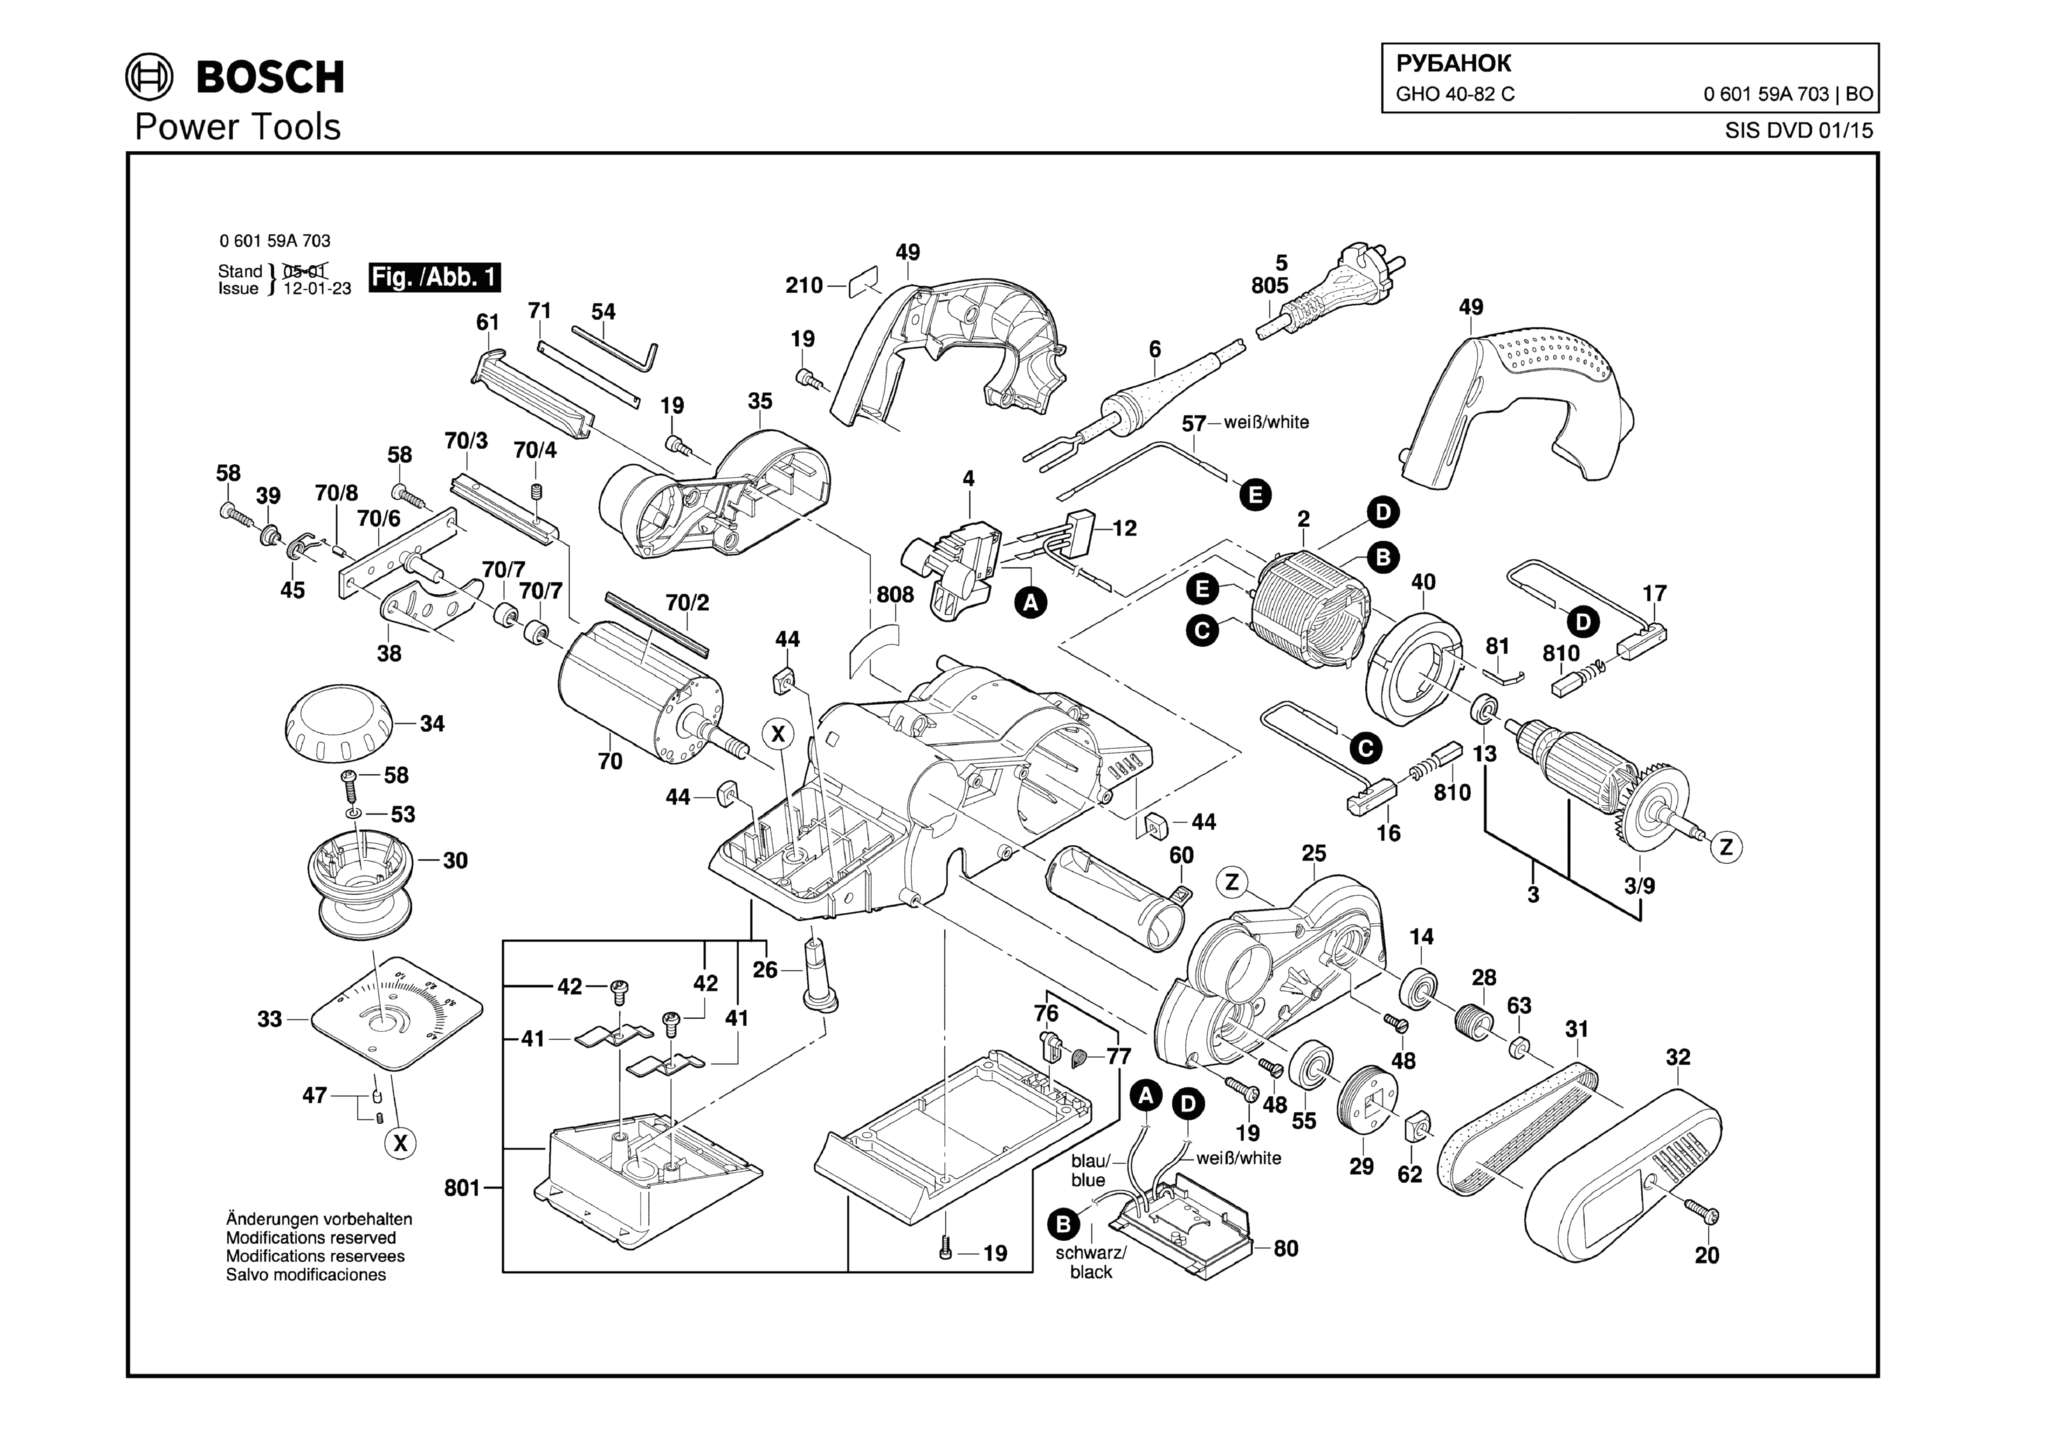 Запчасти, схема и деталировка Bosch GHO 40-82 C (ТИП 060159A703)